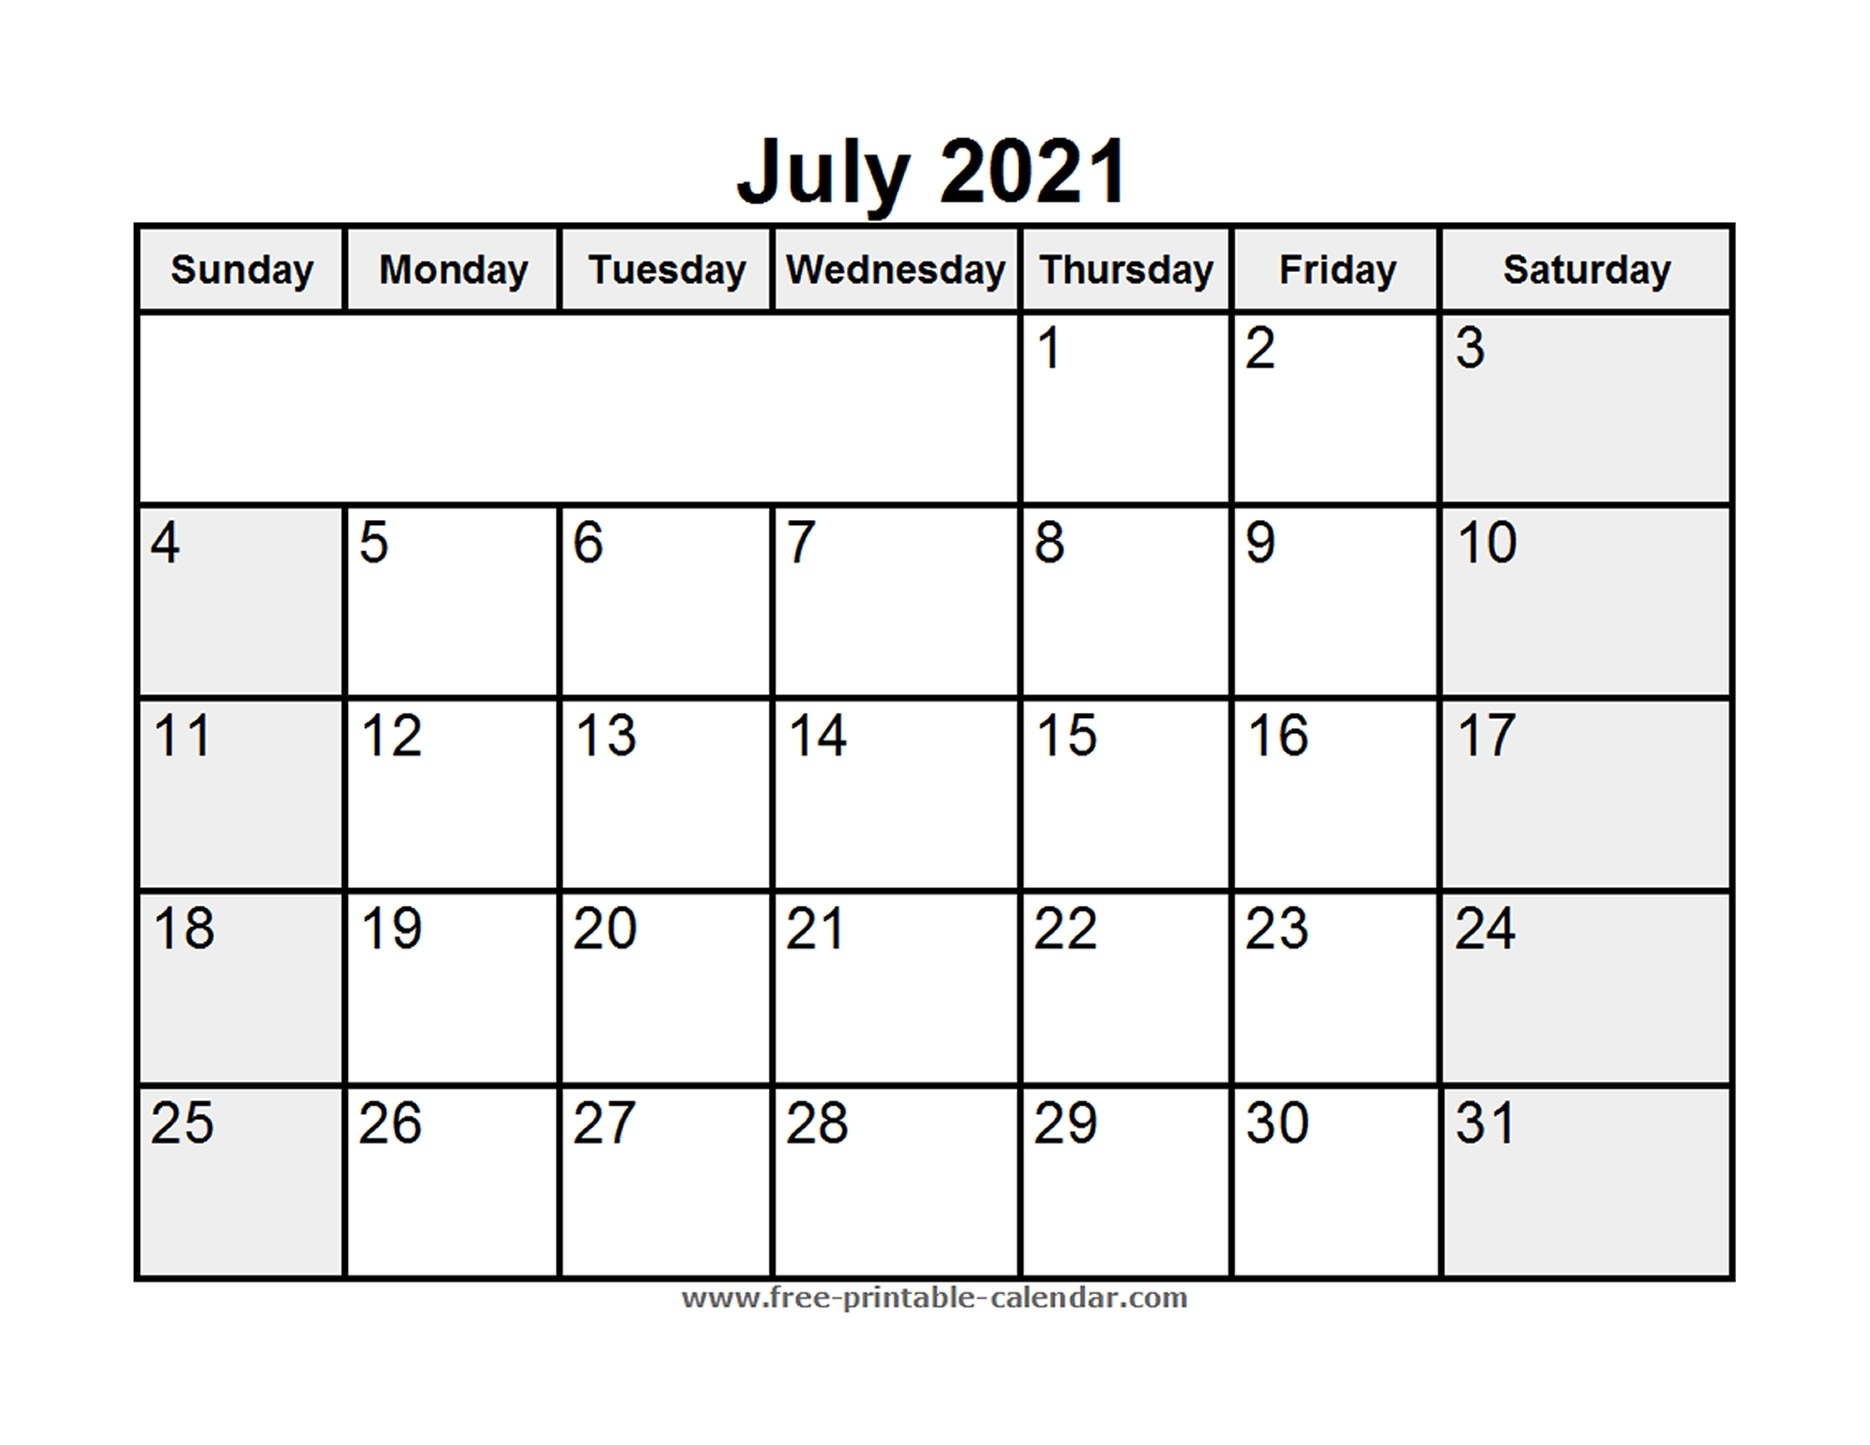 Printable July 2021 Calendar - Free-Printable-Calendar July 2021 Calendar Month